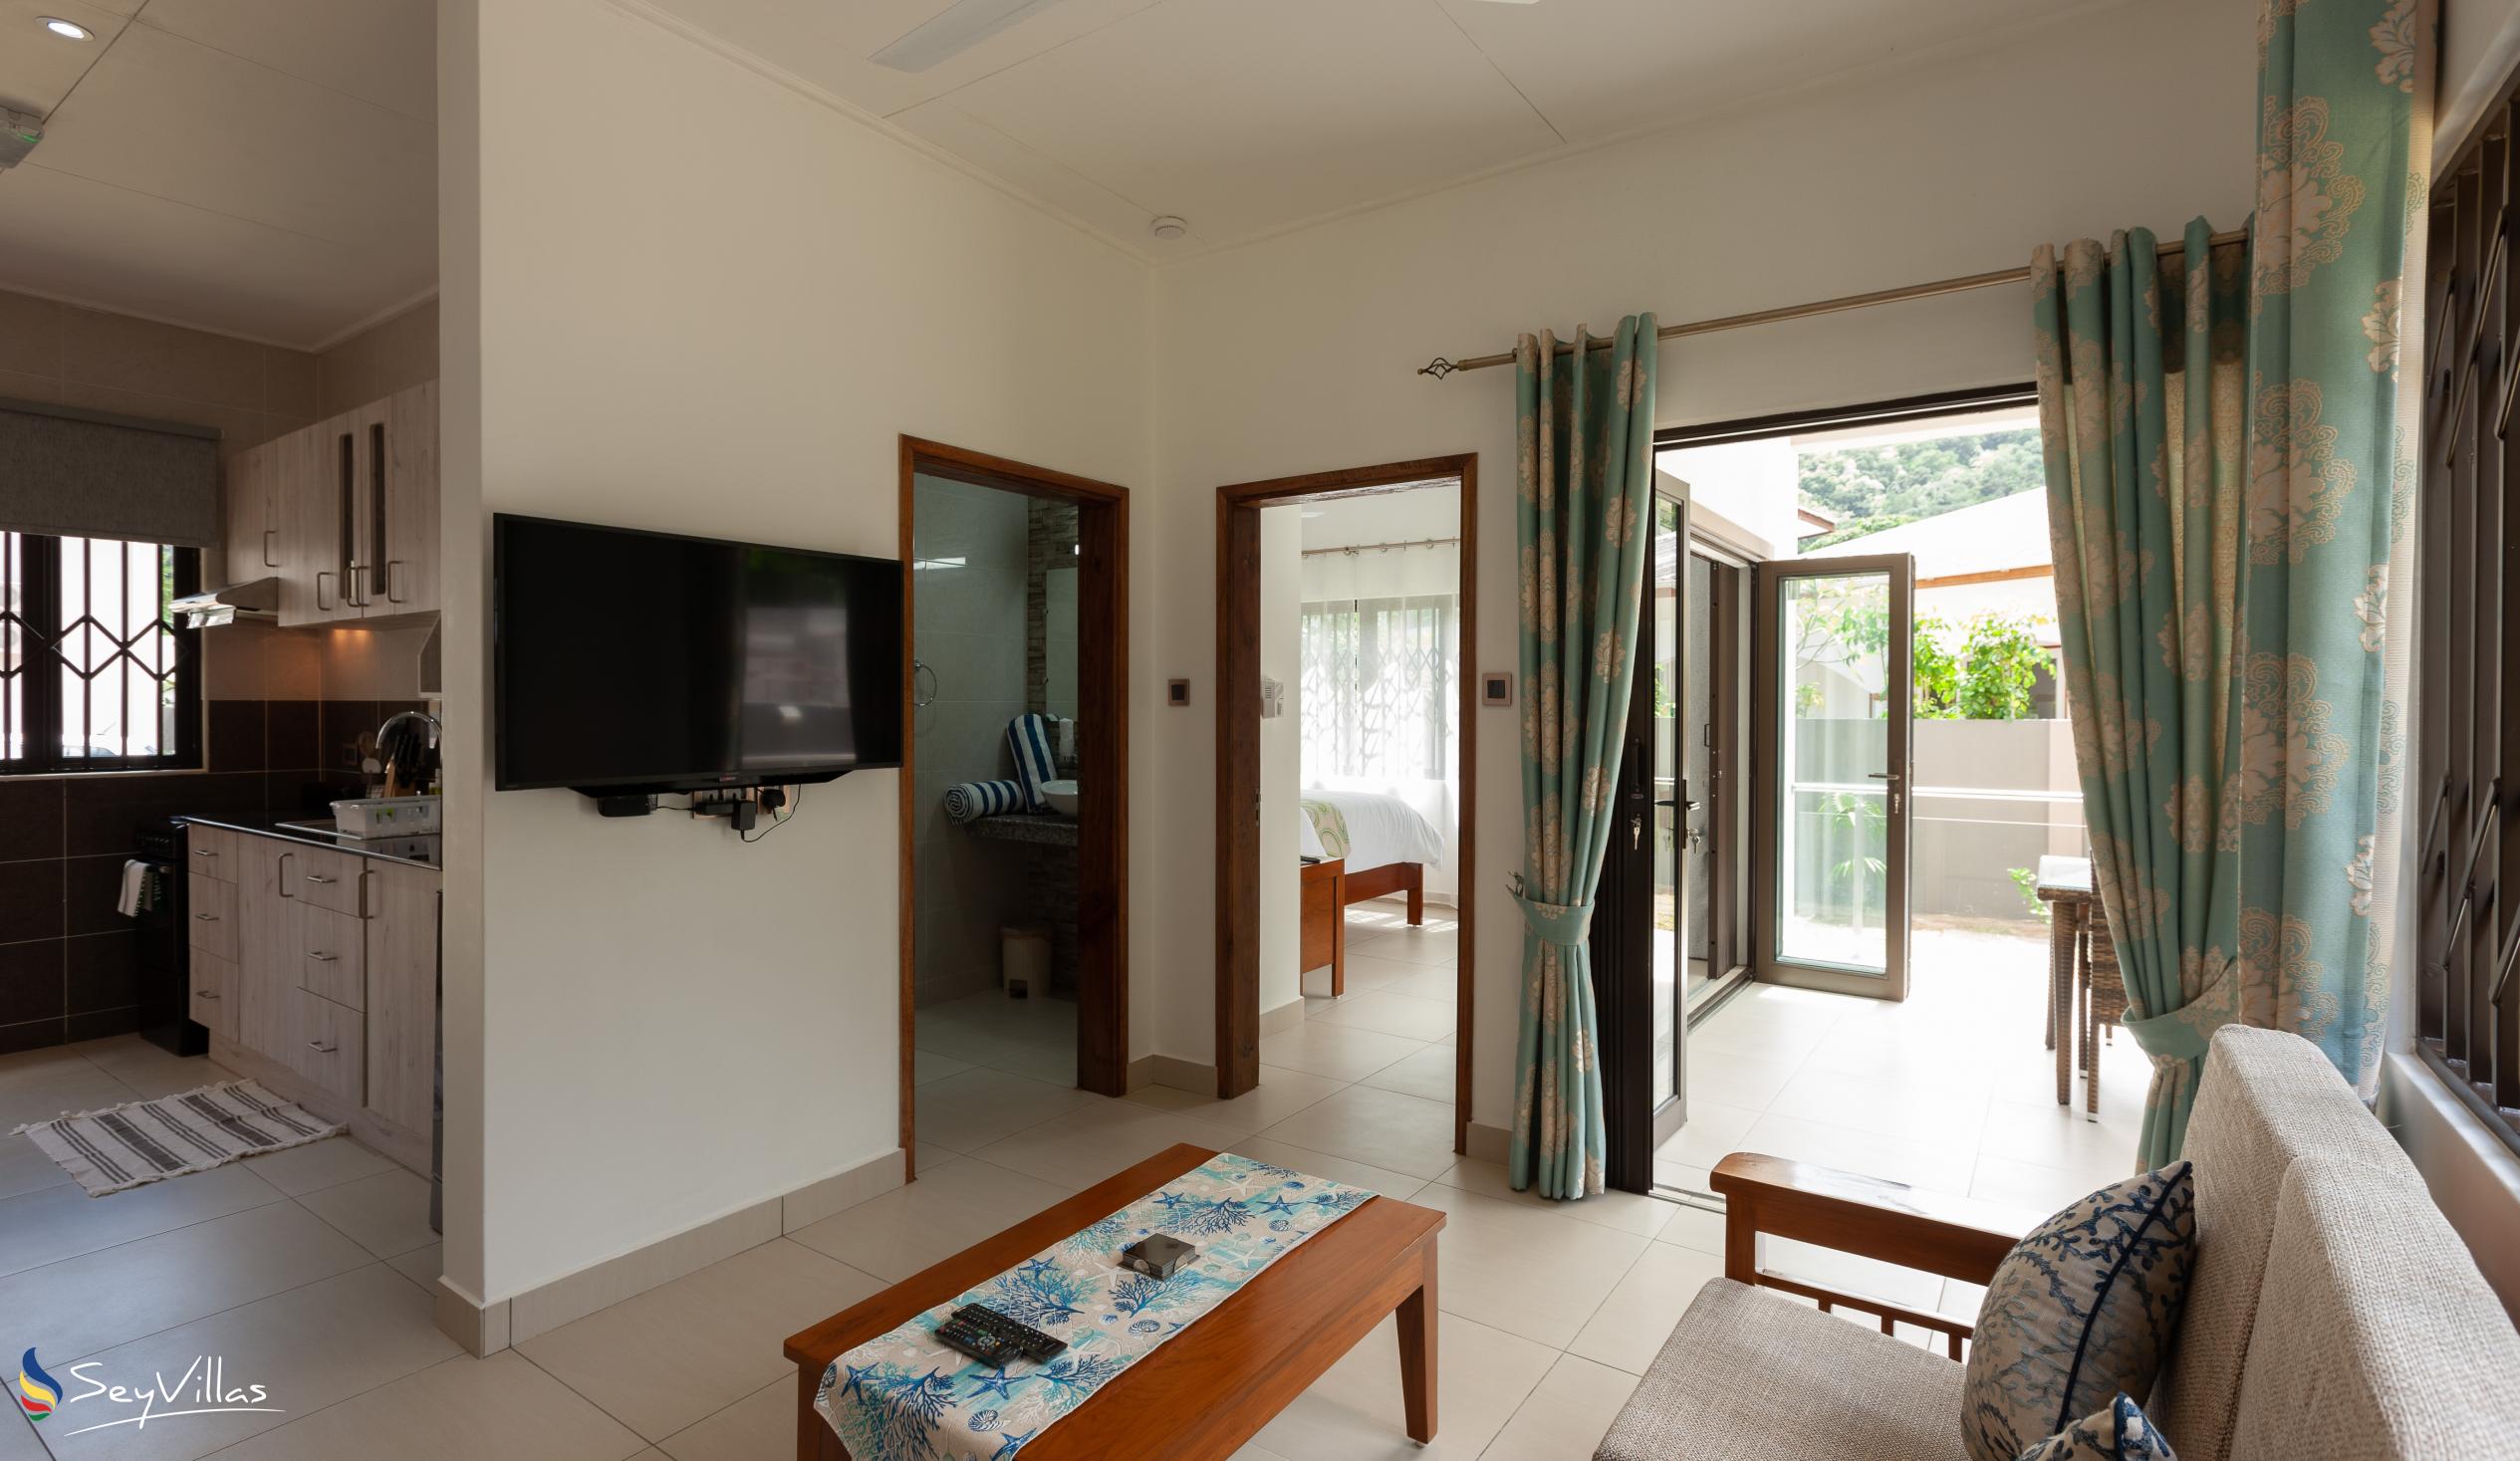 Foto 42: Palm Holiday Apartments - Appartement im Erdgeschoss - Praslin (Seychellen)